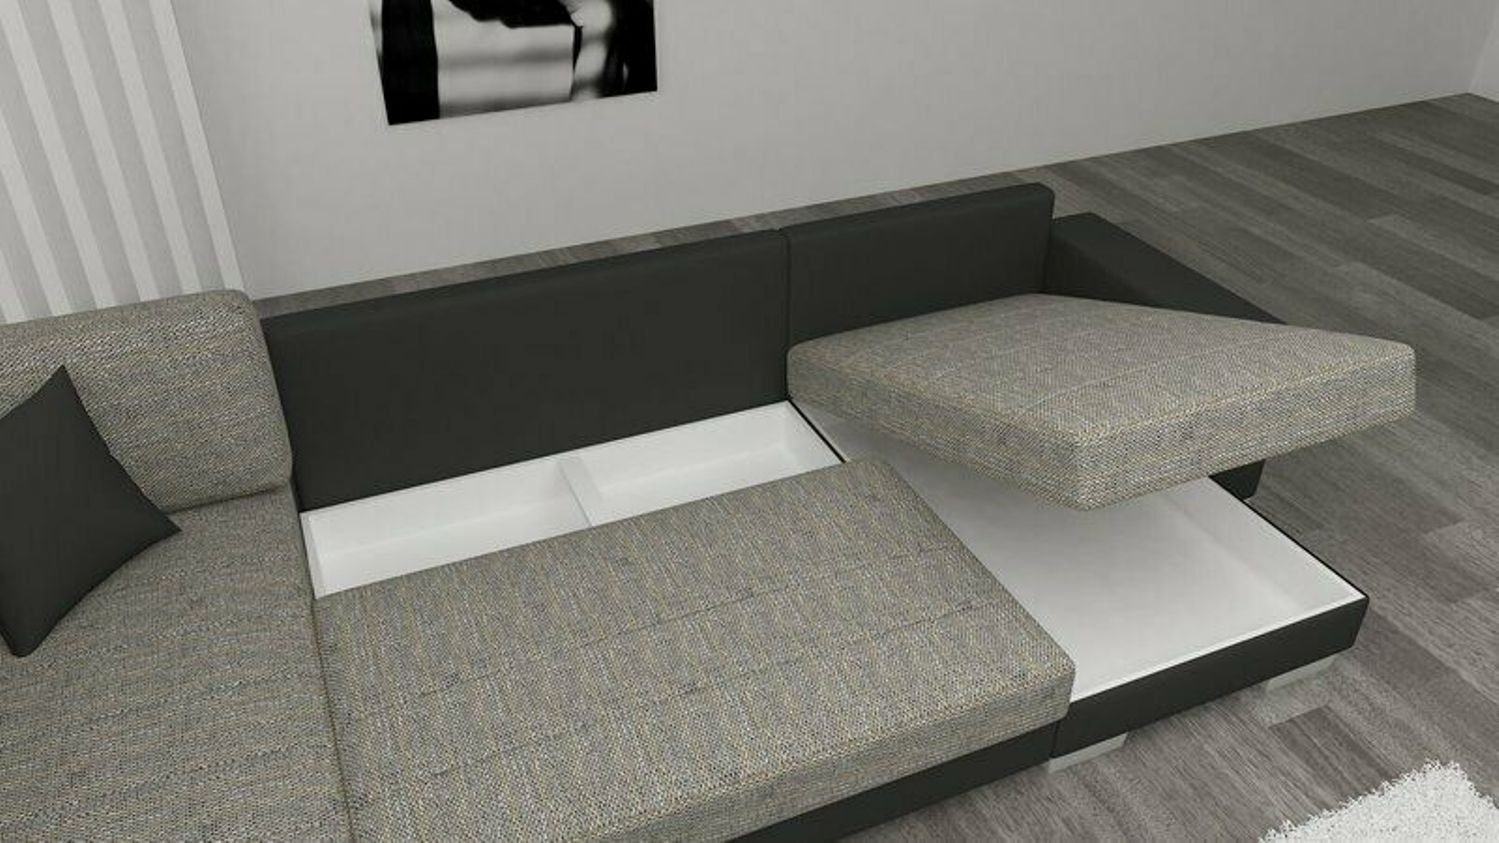 JVmoebel Ecksofa Design Schwarz Bettfunktion Ecksofa Schlafsofa Dunkelgrau / Mit Textil, Sofa Polster Couch Bettfunktion